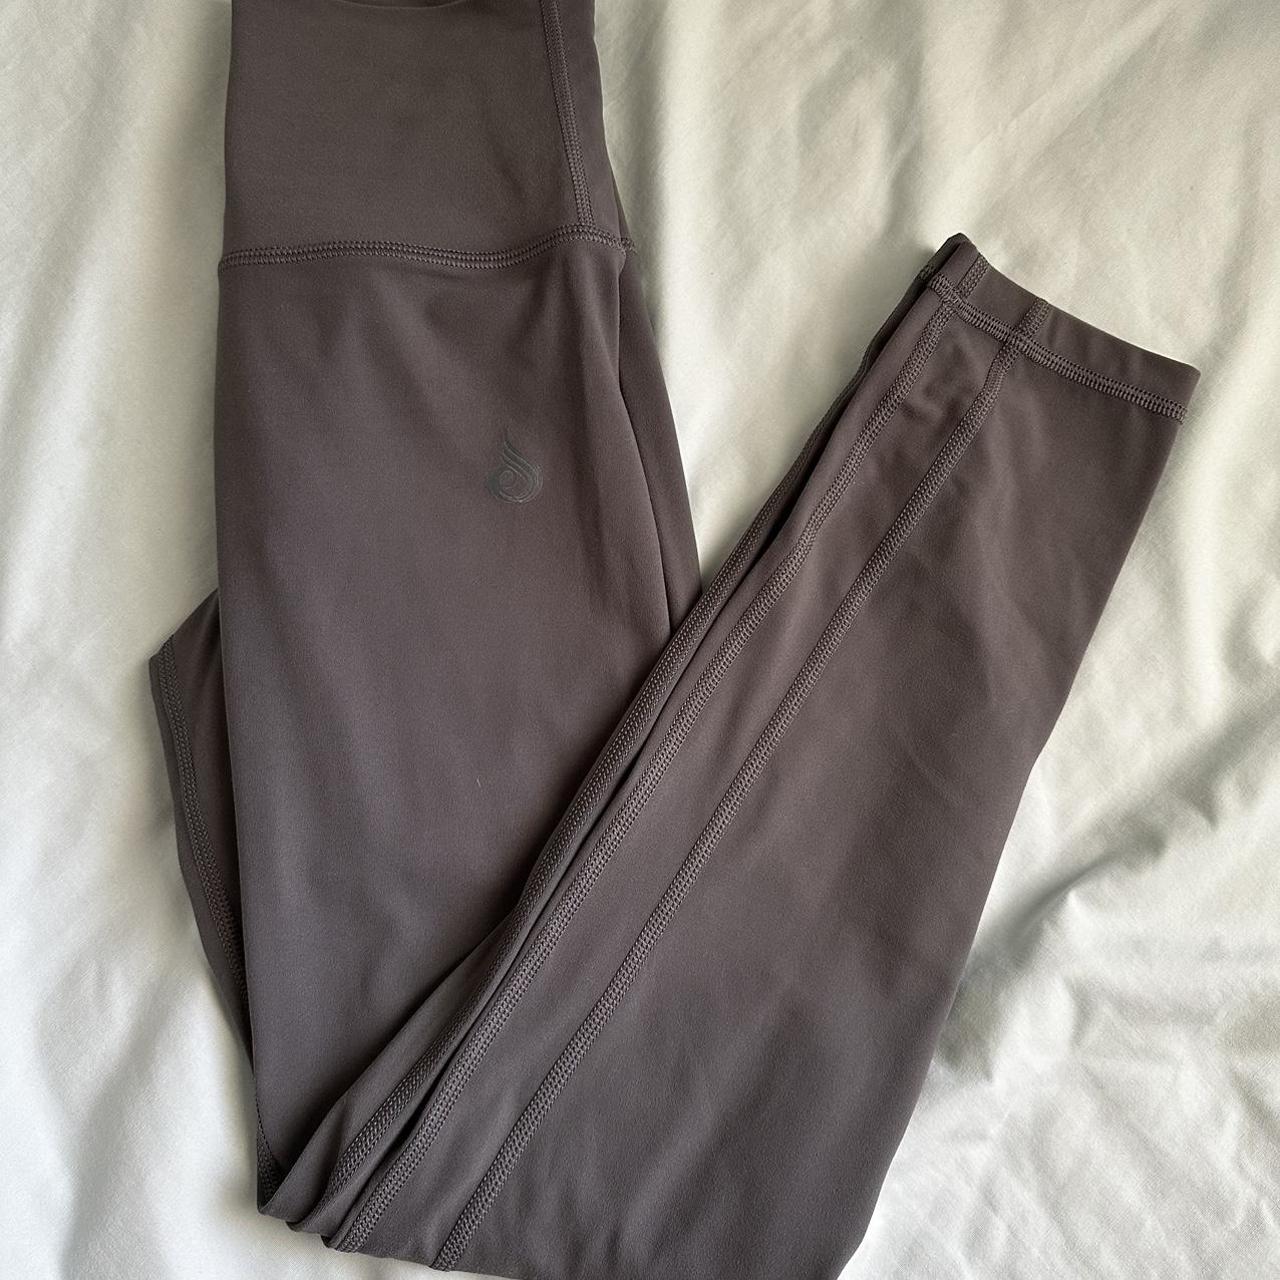 Ryderwear NKD leggings. Size XS. These are Preloved - Depop